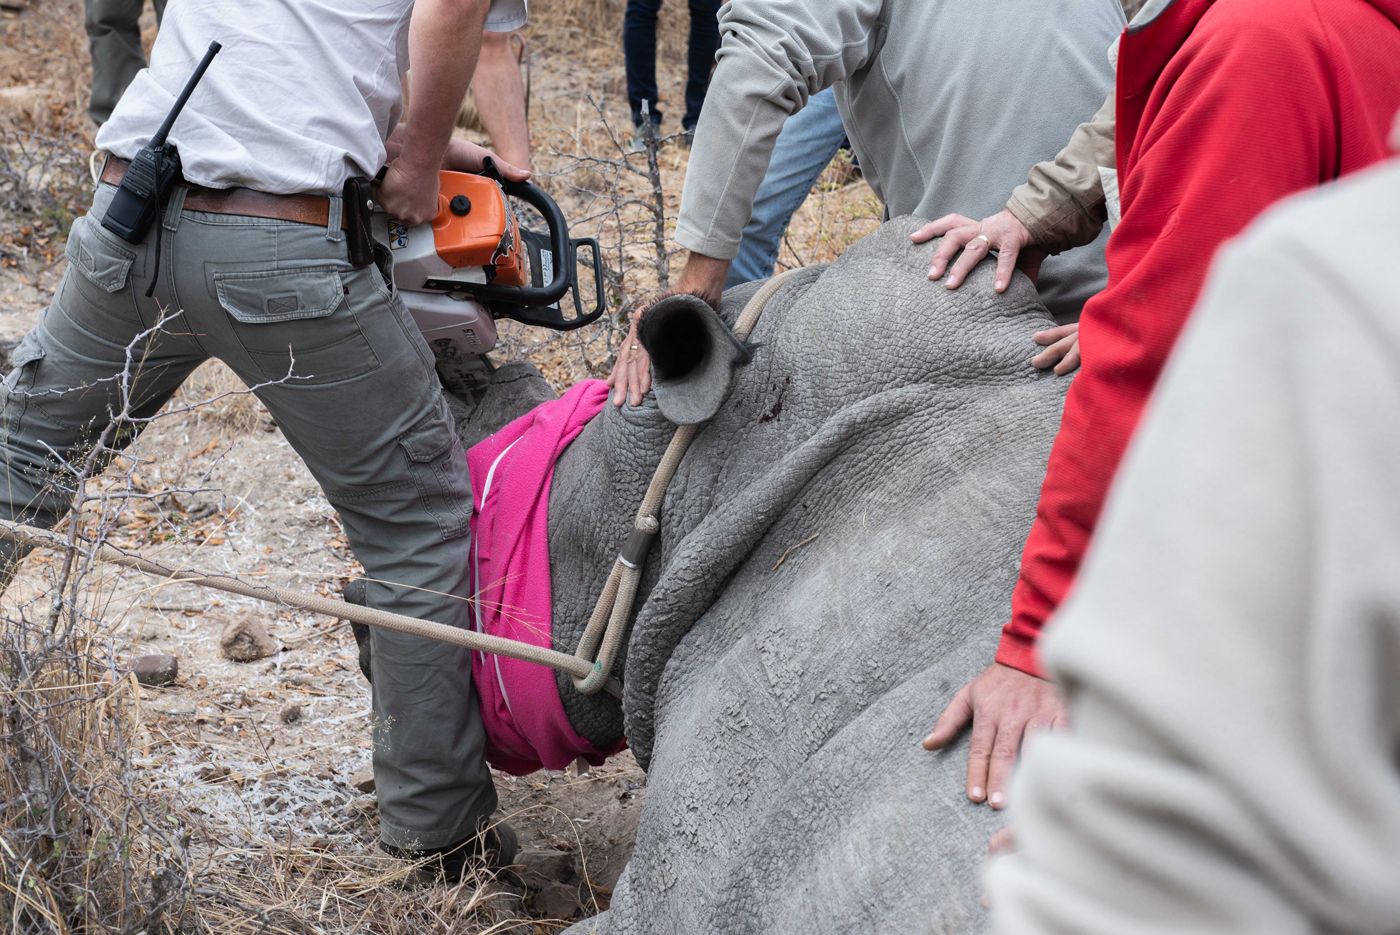 Rhino being dehorned